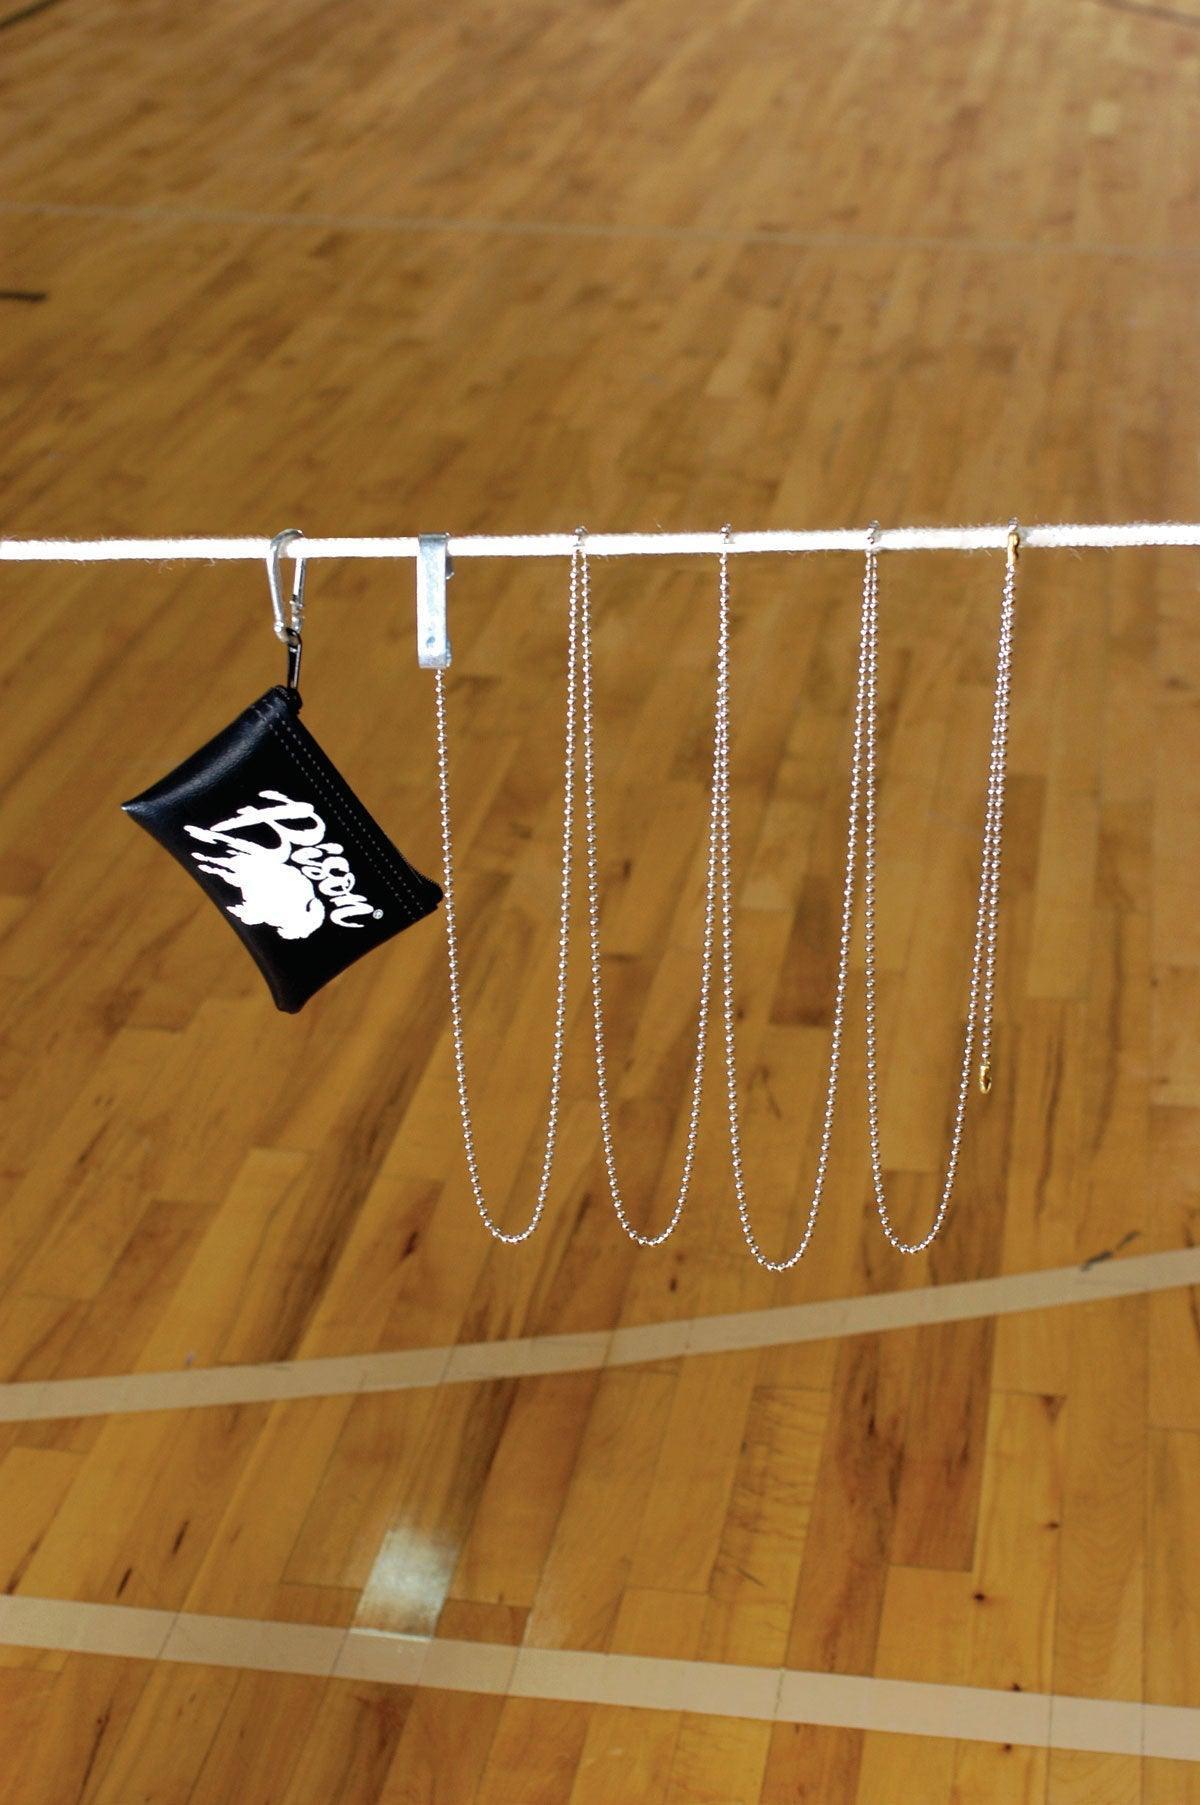 Chain Volleyball Net Height Gauge